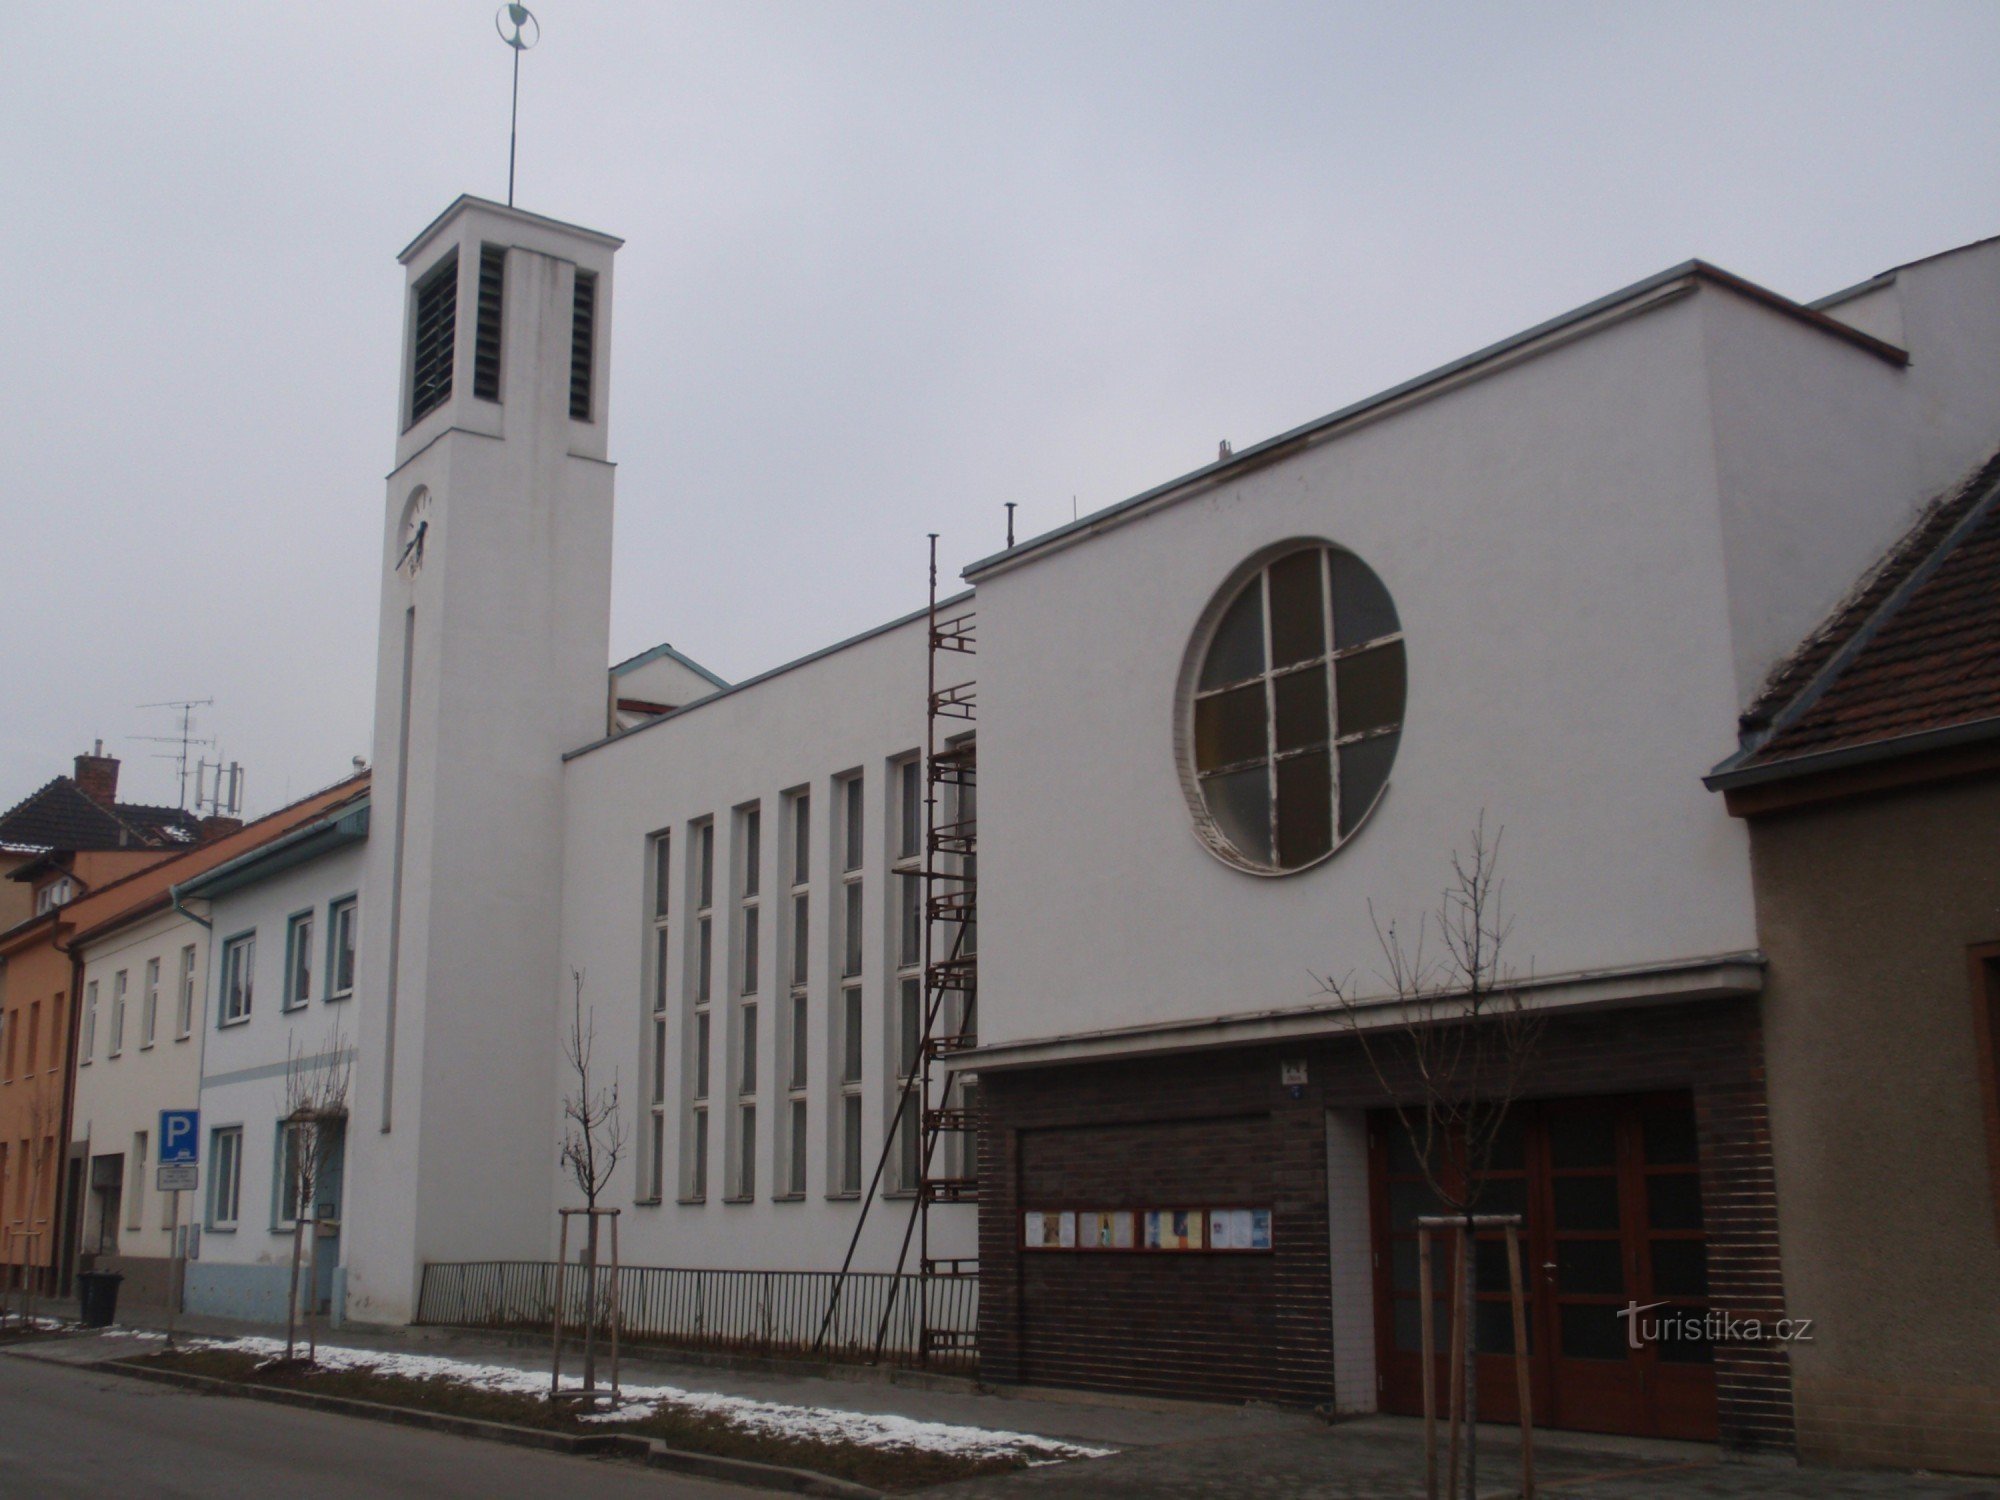 Church of the Czech Brethren Evangelical Church i Brno-Židenice